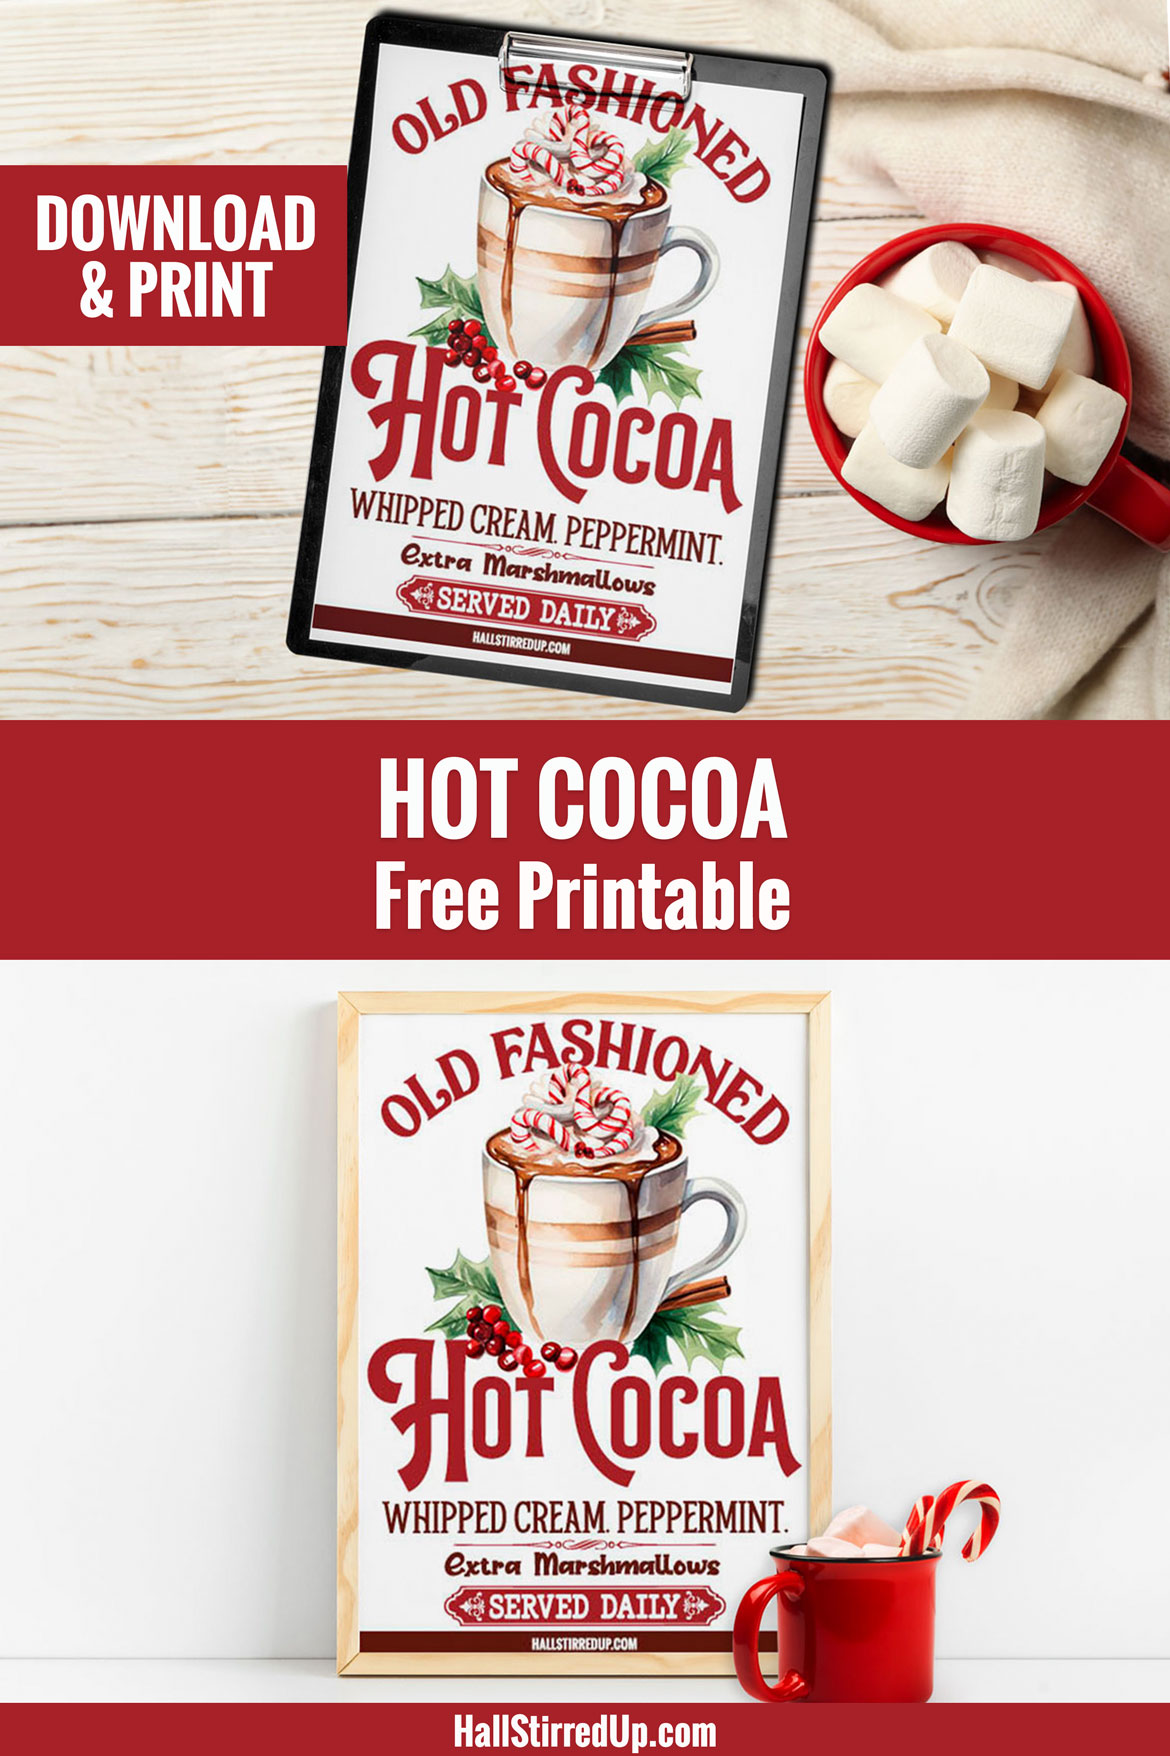 Enjoy the season with a free 'Hot Cocoa' printable sign